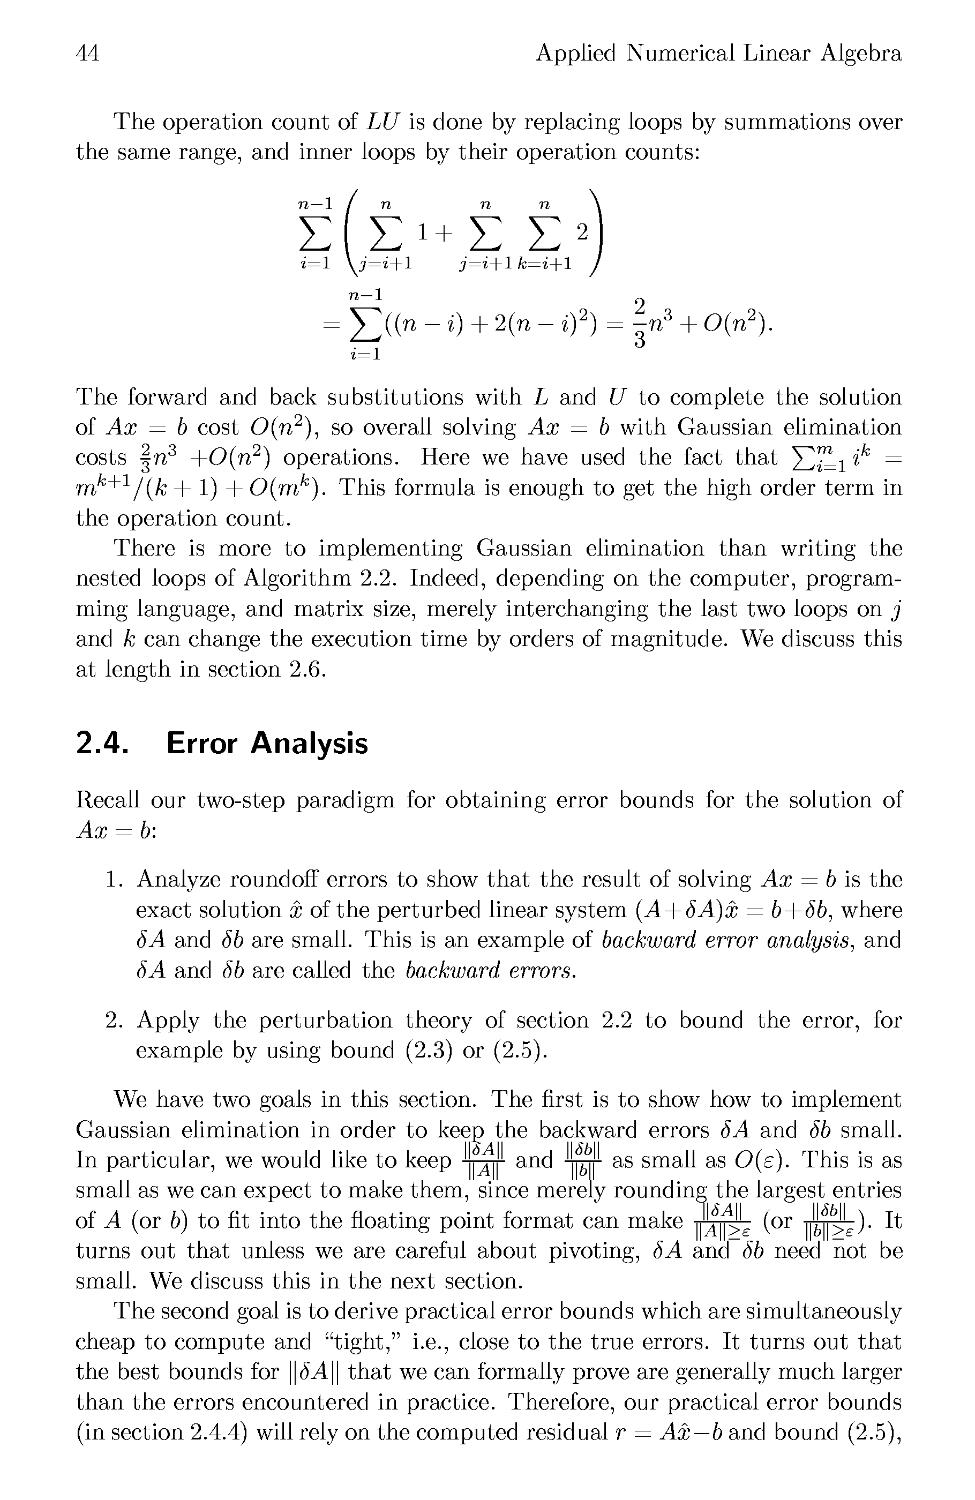 2.4 Error Analysis